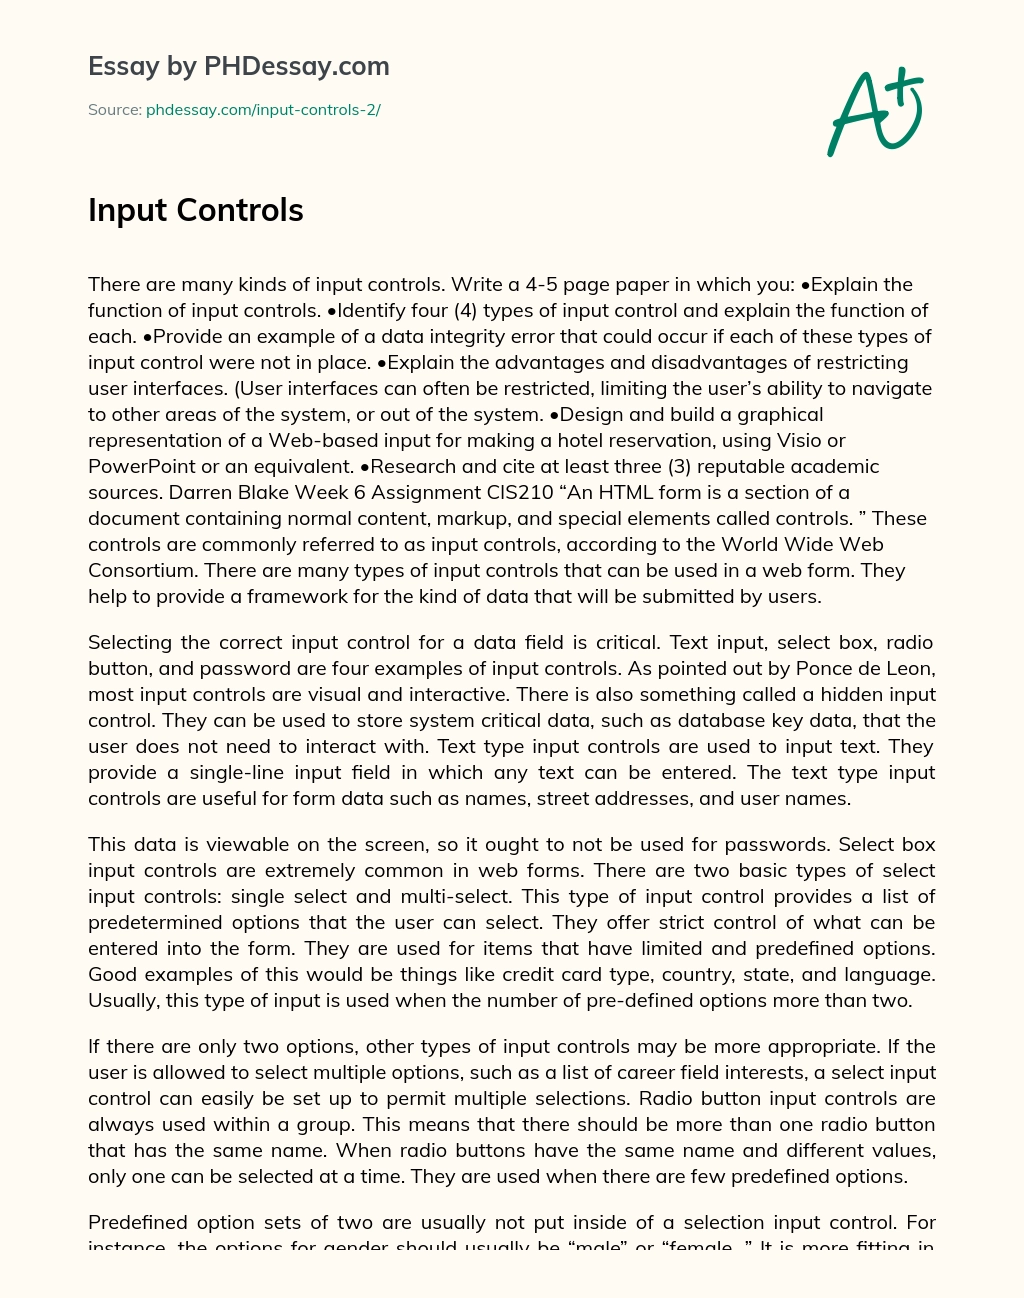 Input Controls essay